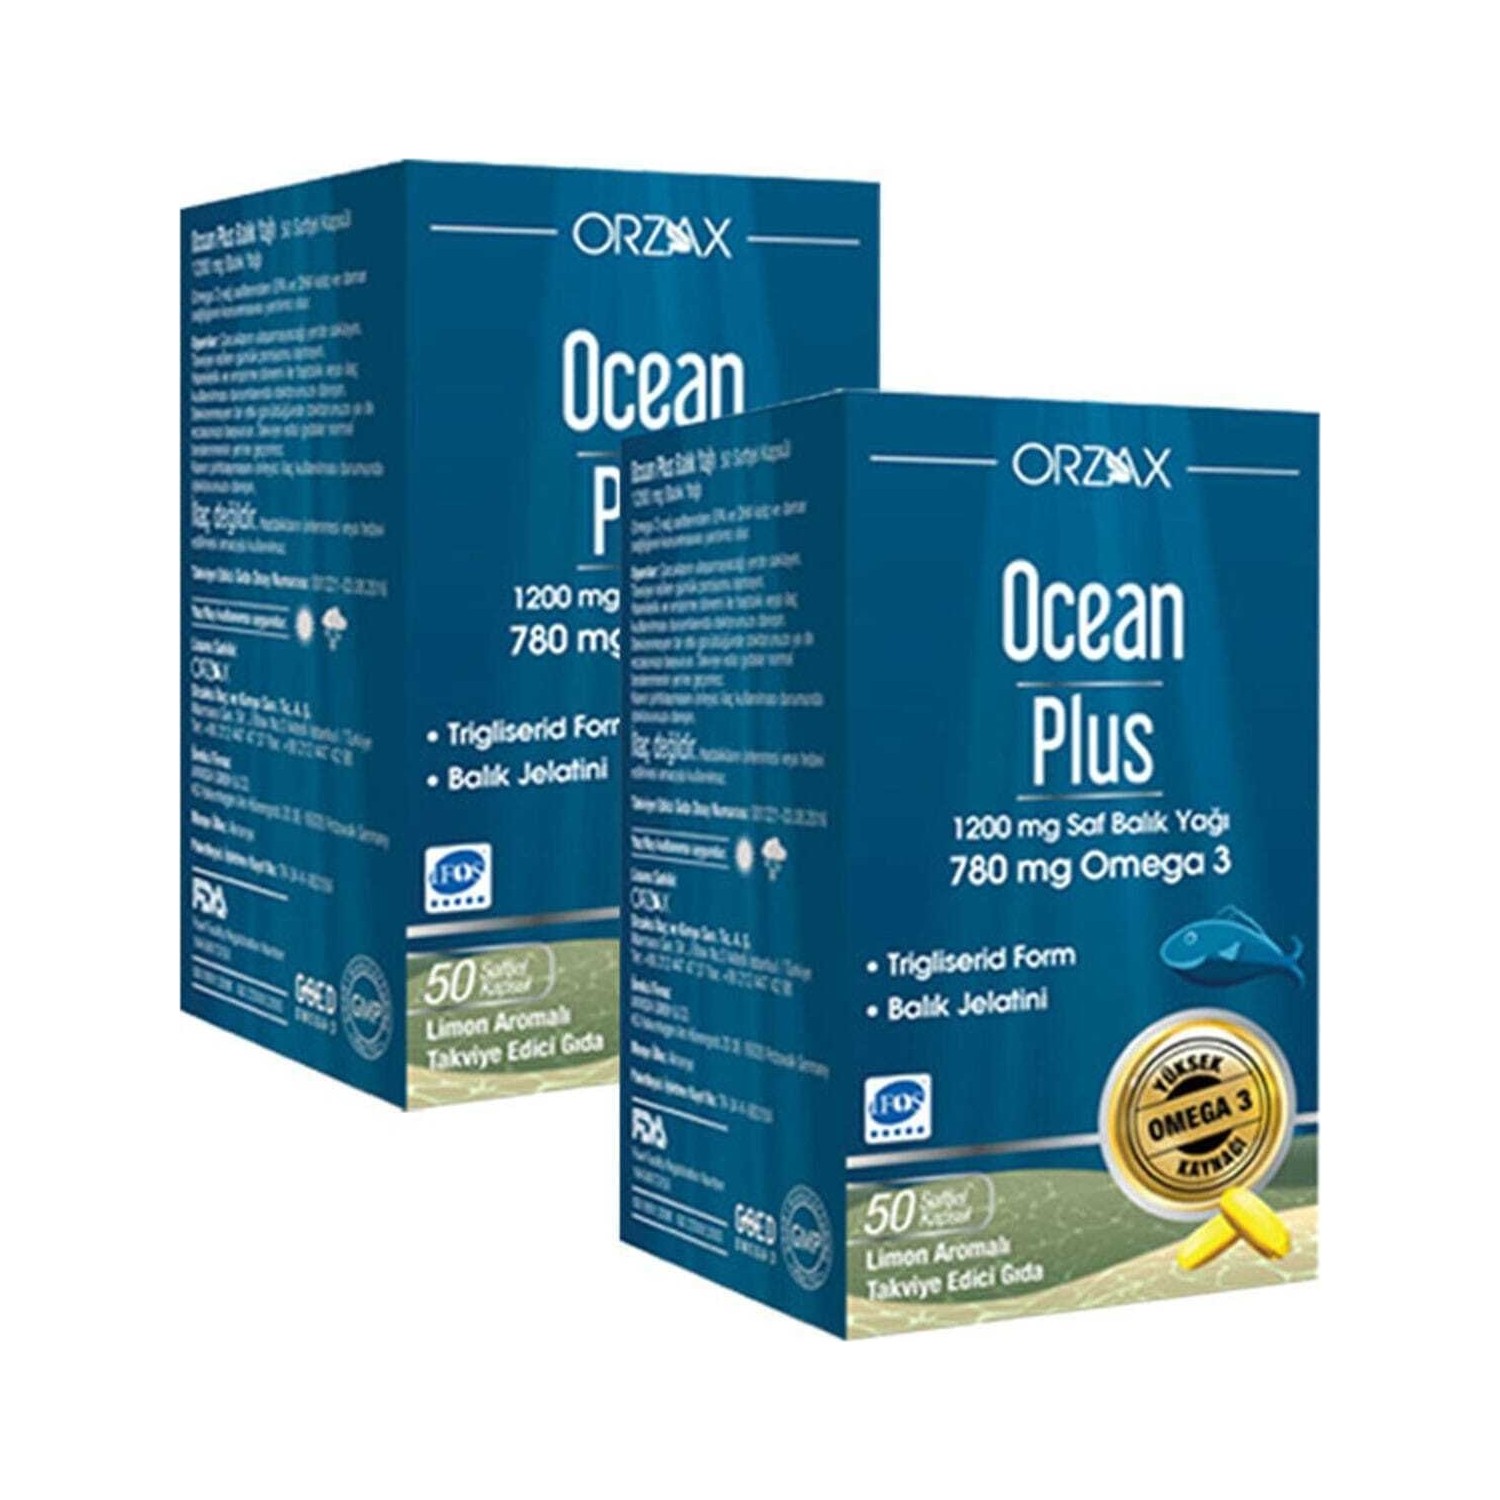 Омега-3 Plus Orzax 1200 мг, 2 упаковки по 50 капсул омега 3 ocean plus 1200 мг 2 упаковки по 100 капсул